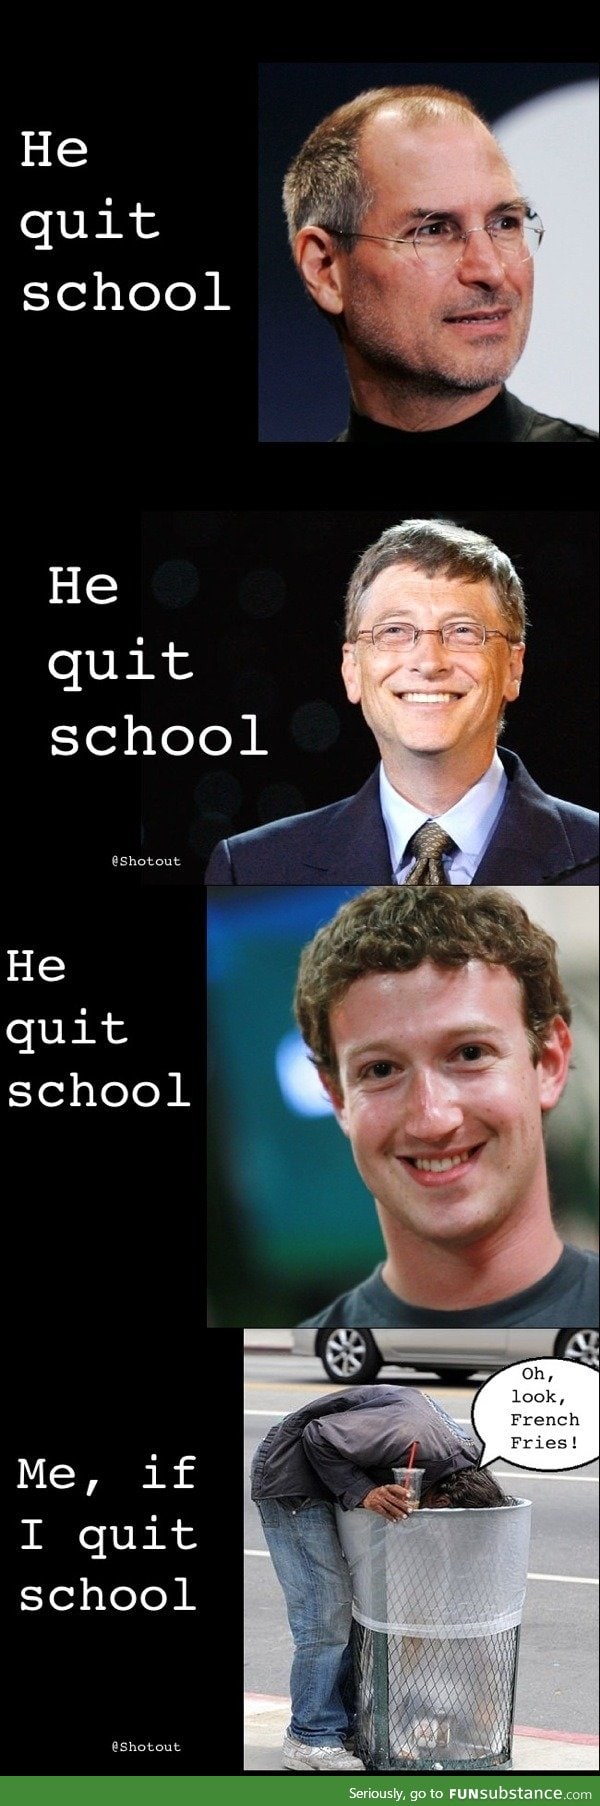 Quitting school